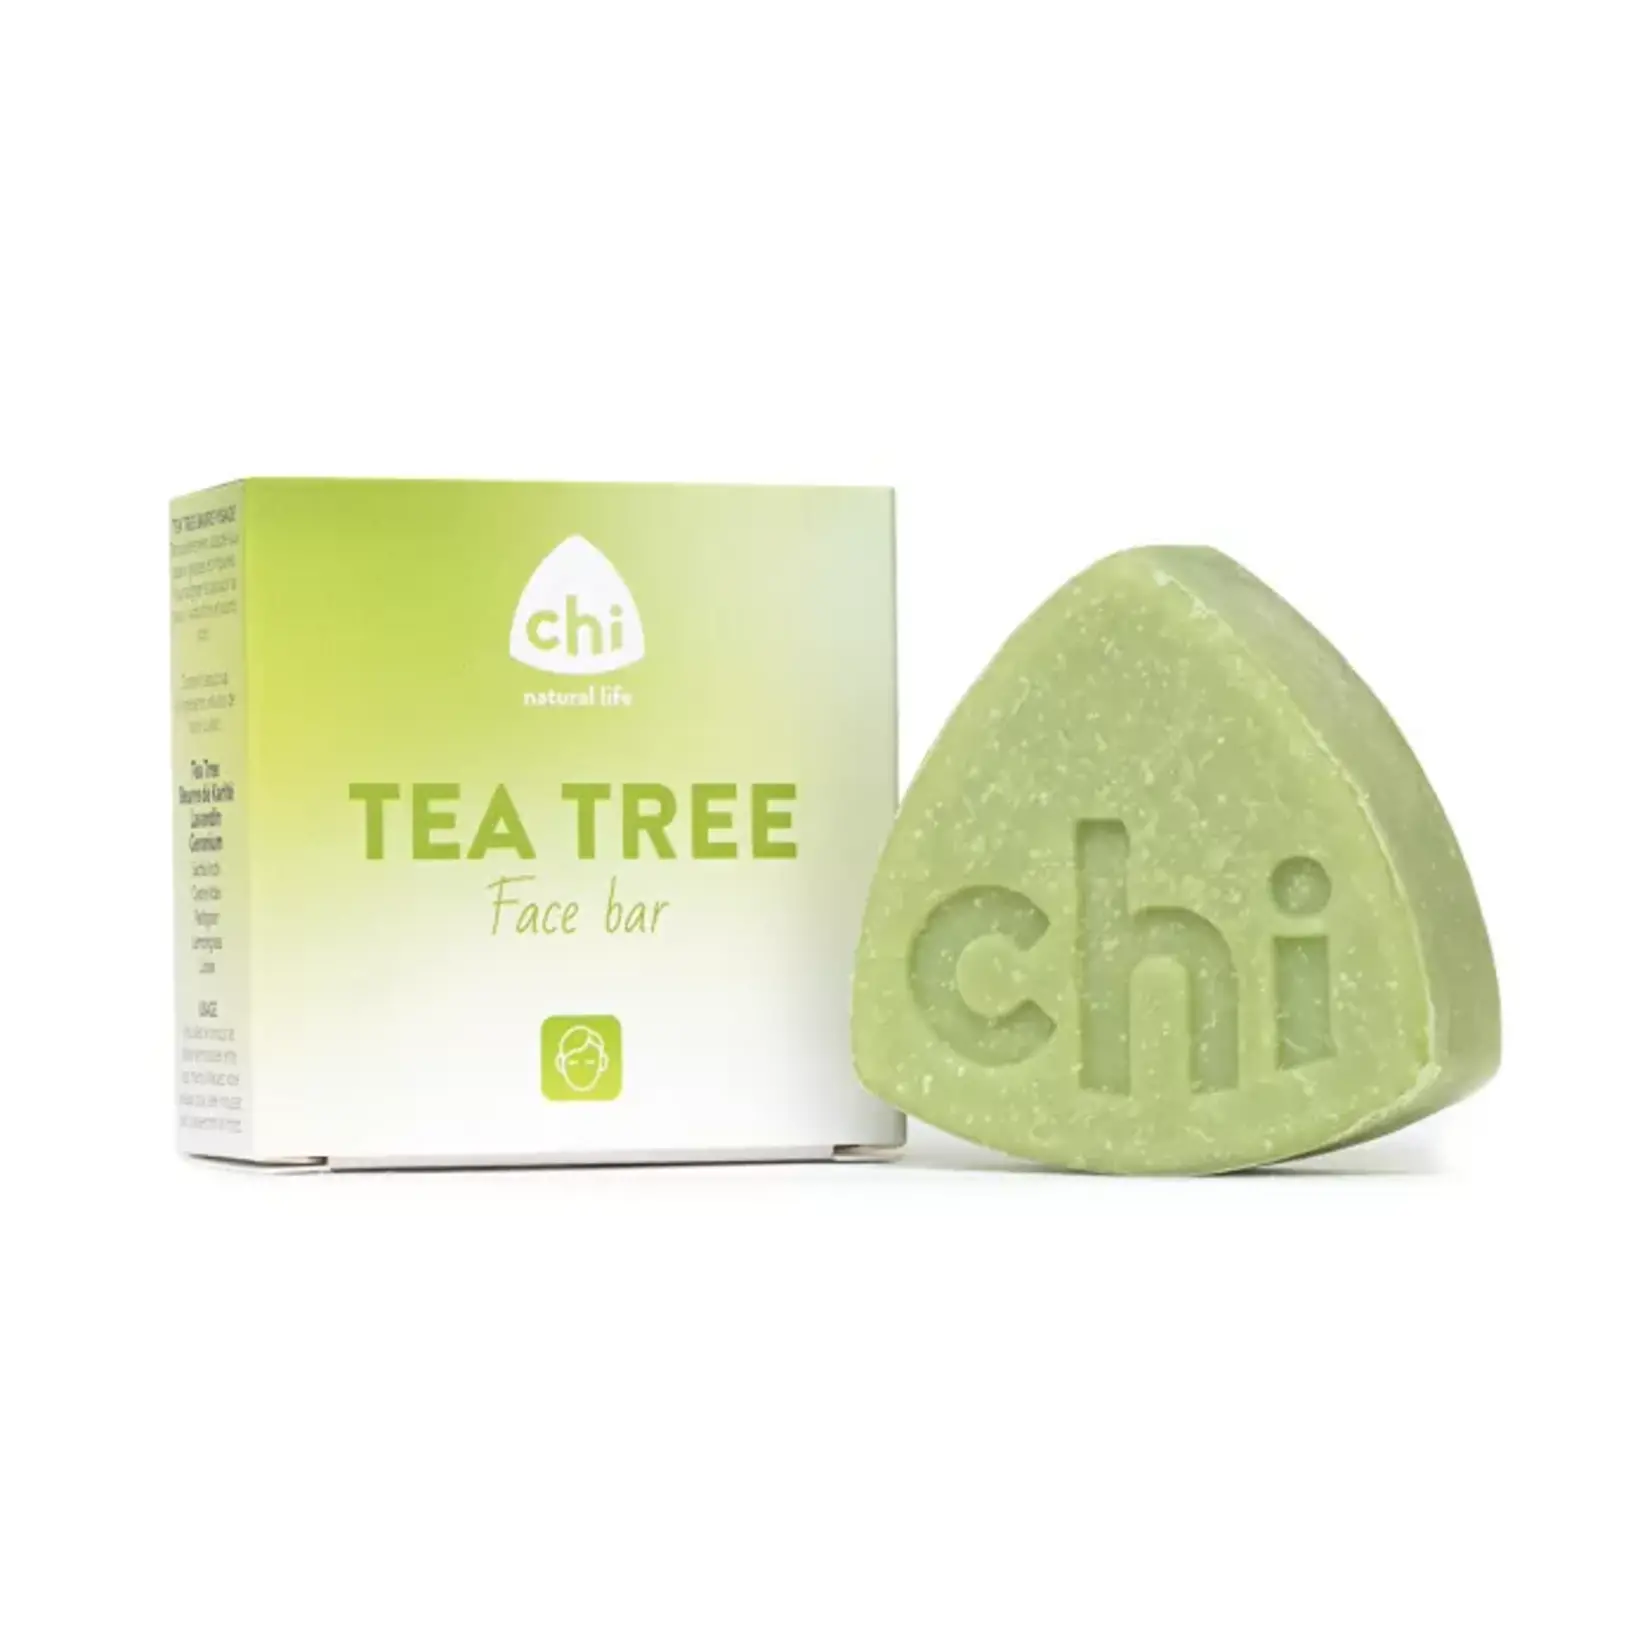 Chi Natural Life Tea Tree Face bar, 60 gram